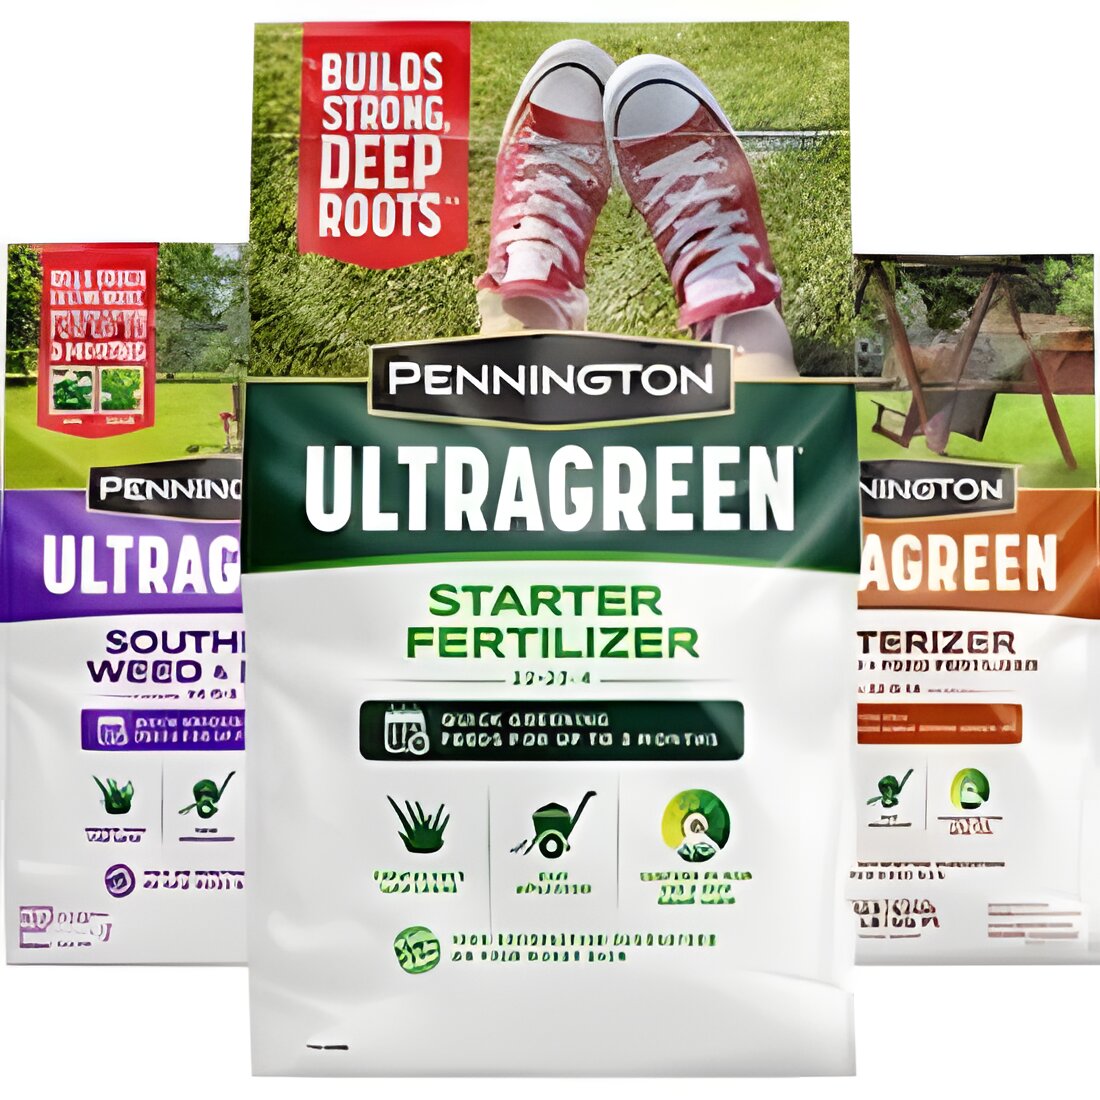 Free Pennington Fertilizer